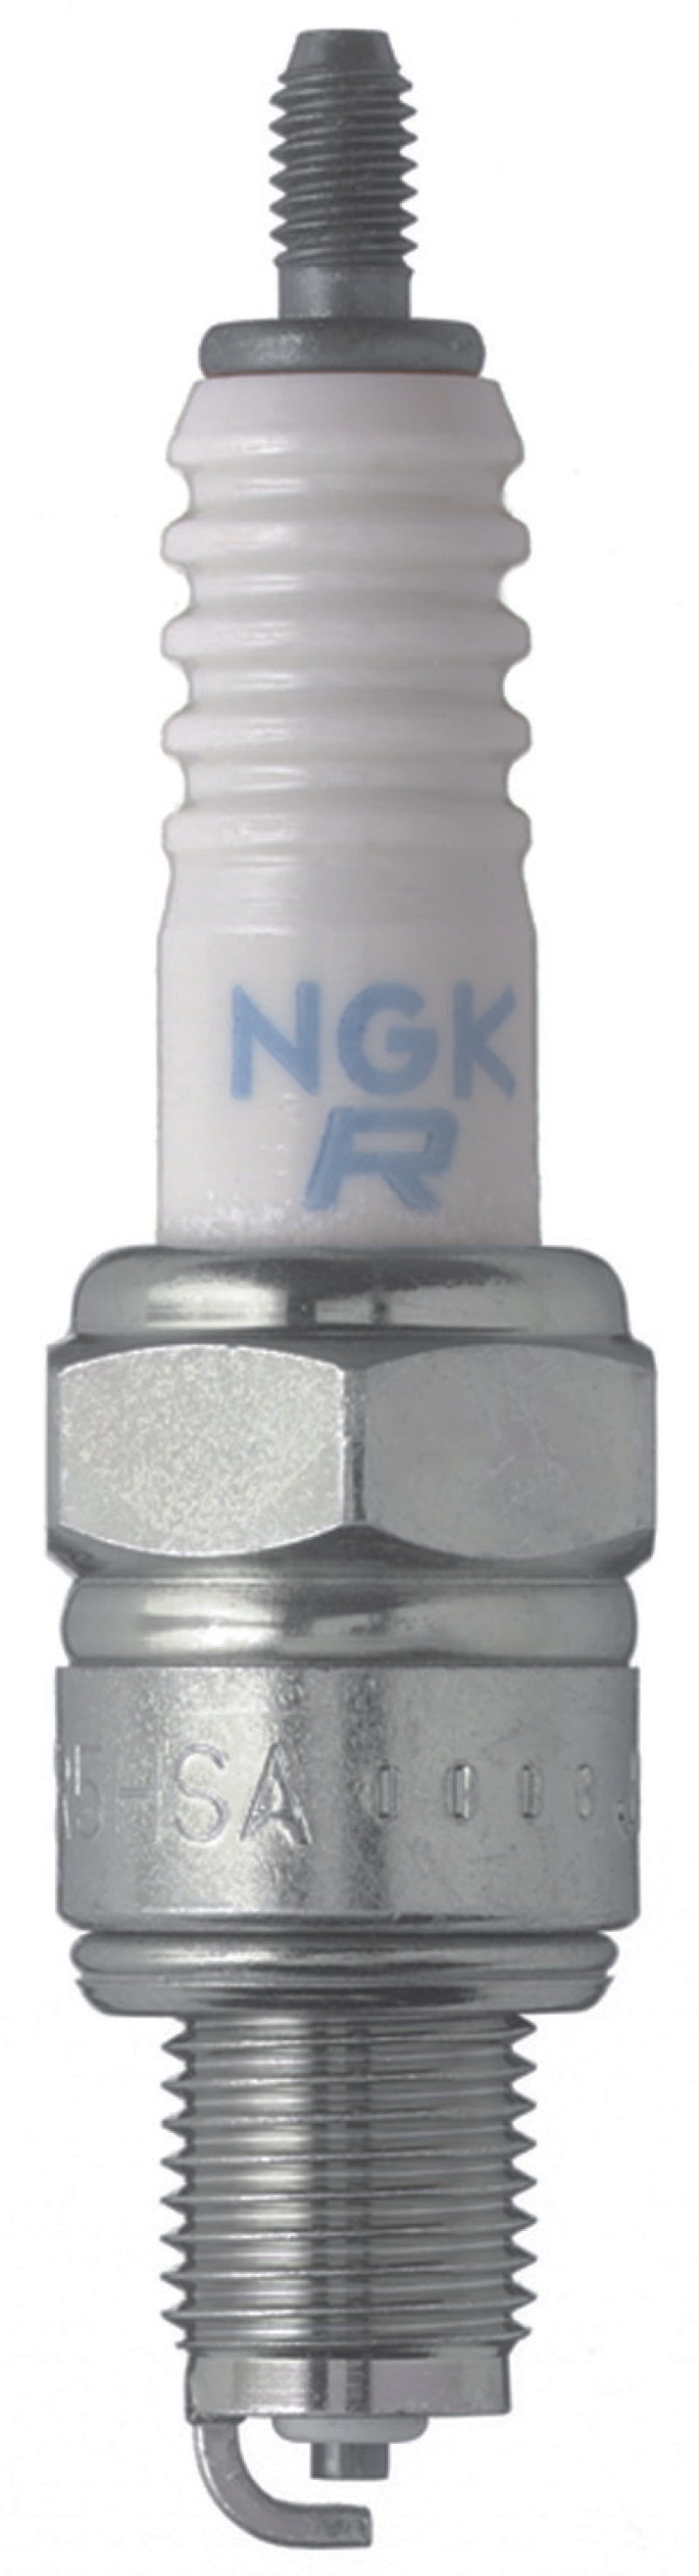 NGK Nickel Spark Plug Box of 4 (CR6HSA) -  Shop now at Performance Car Parts